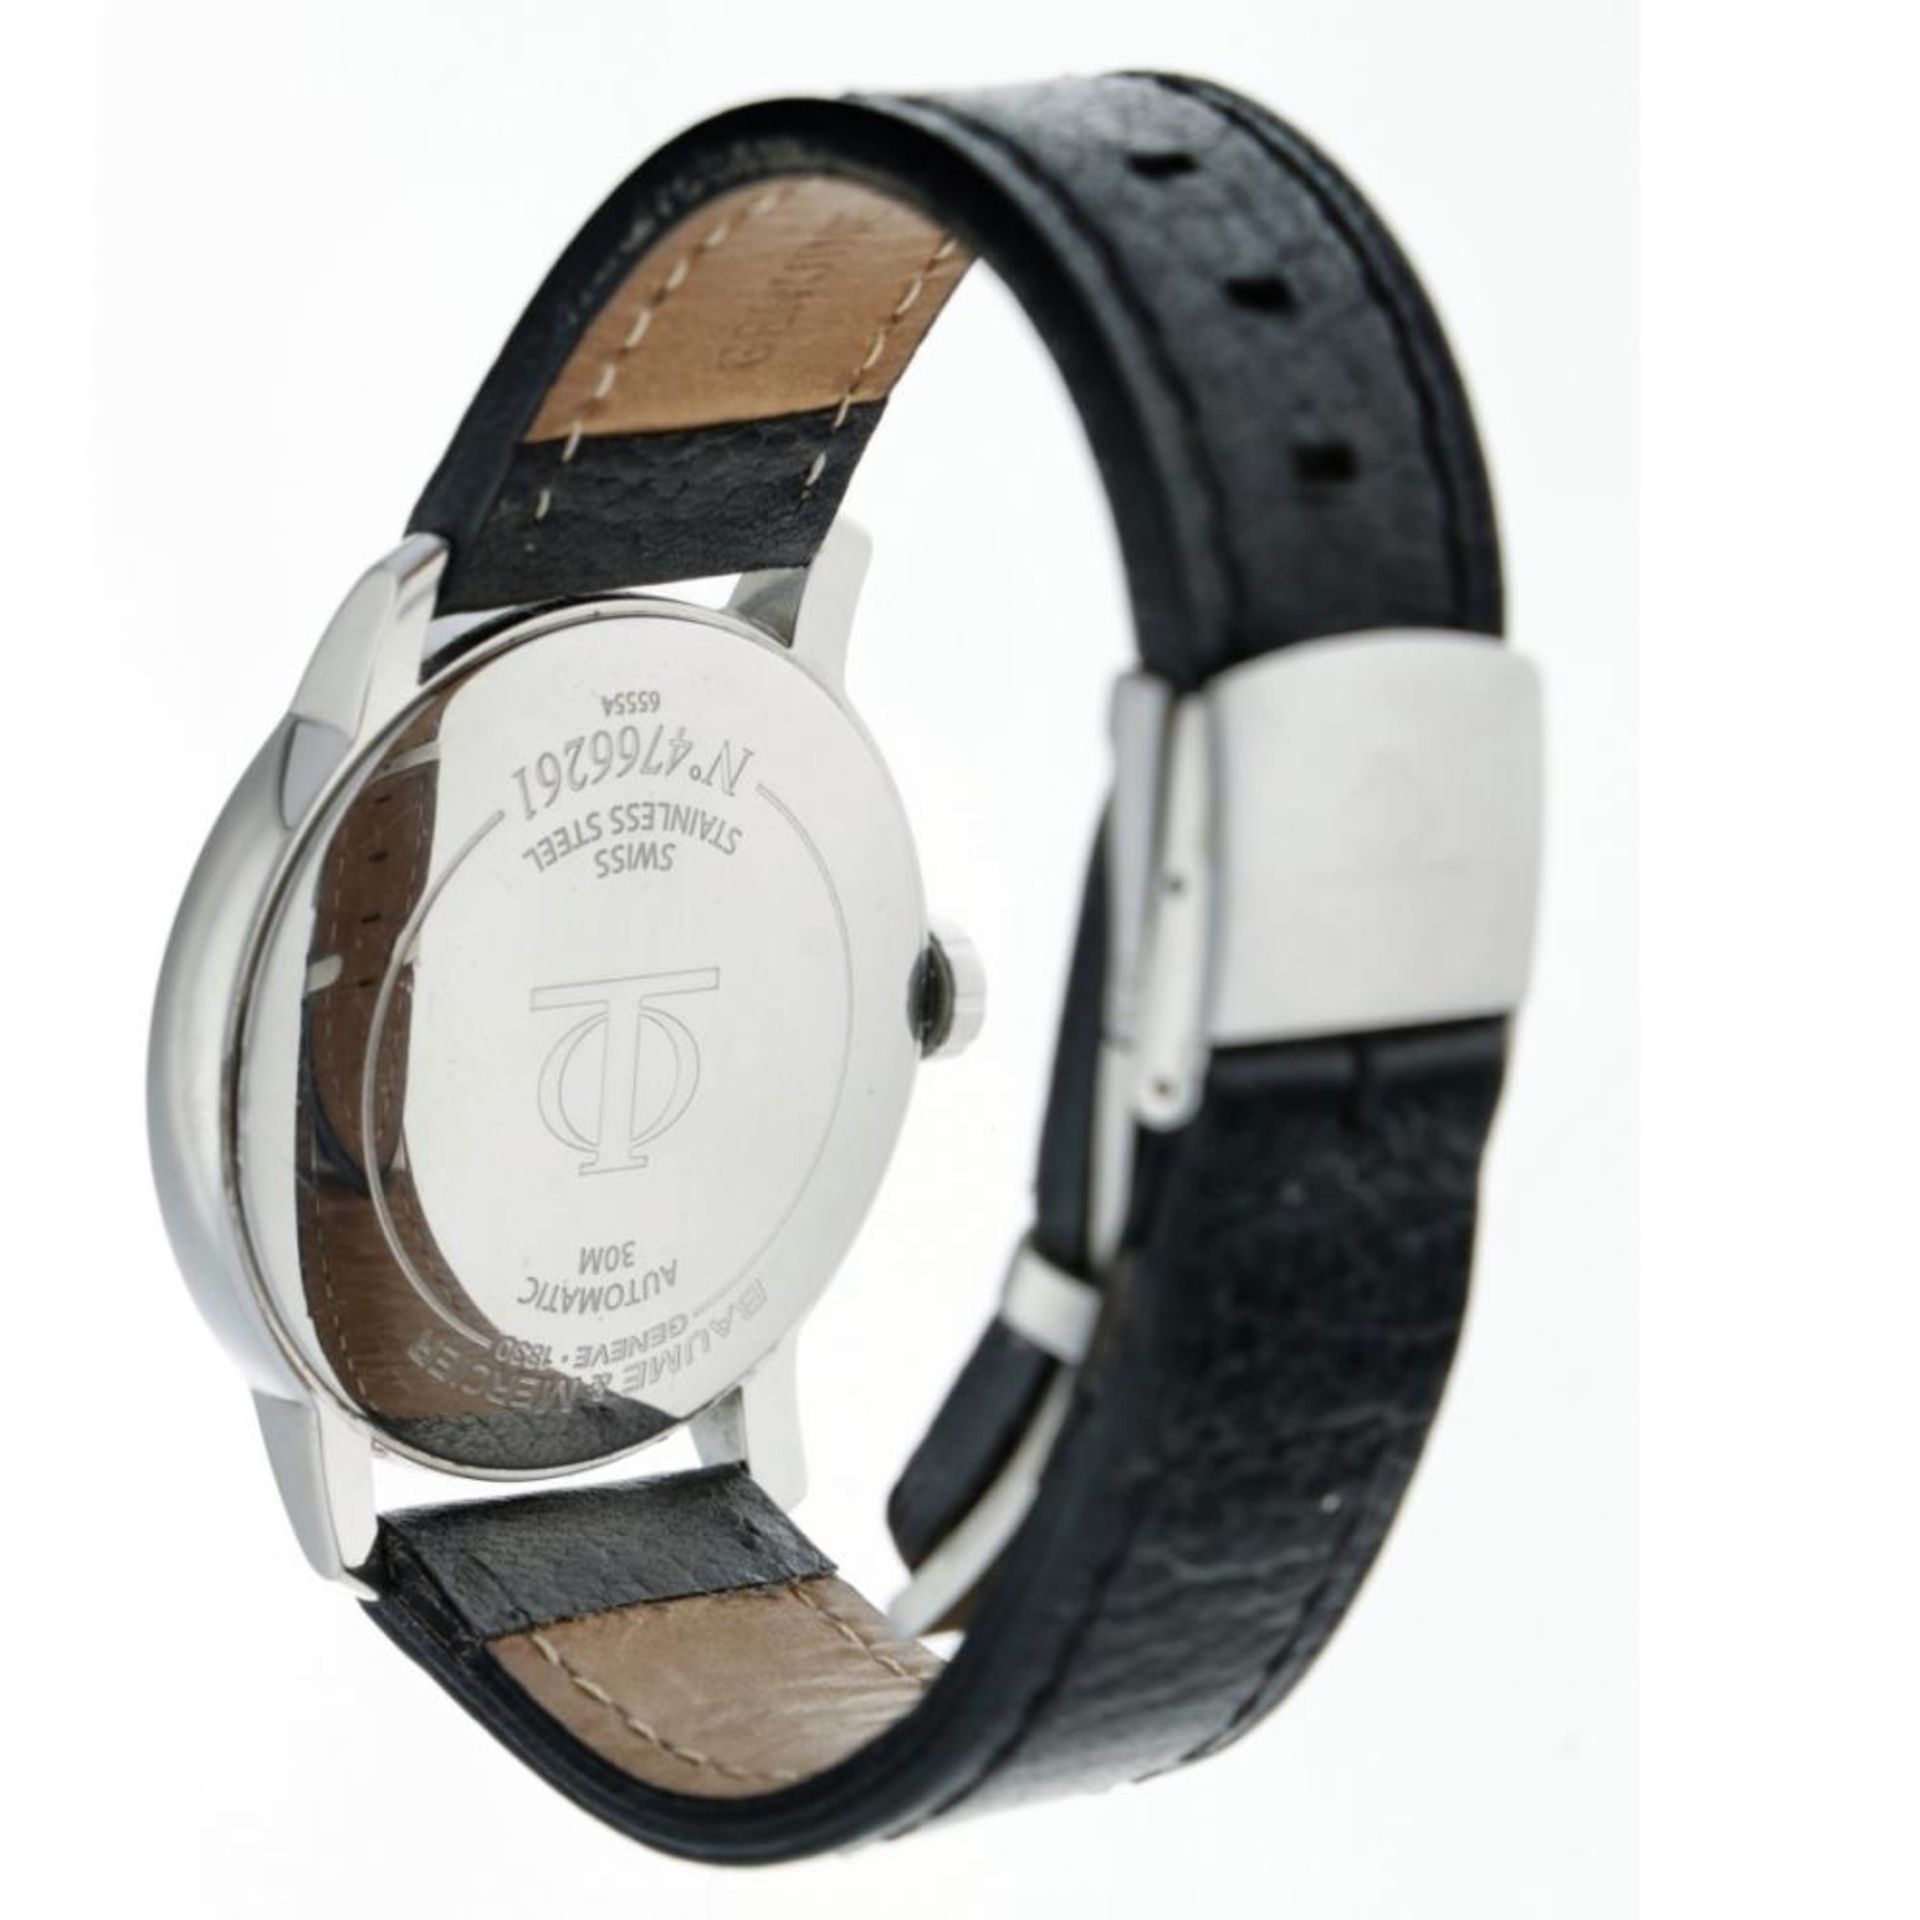 Baume & Mercier Classima 65554 - Men's watch - approx. 2010. - Image 5 of 10